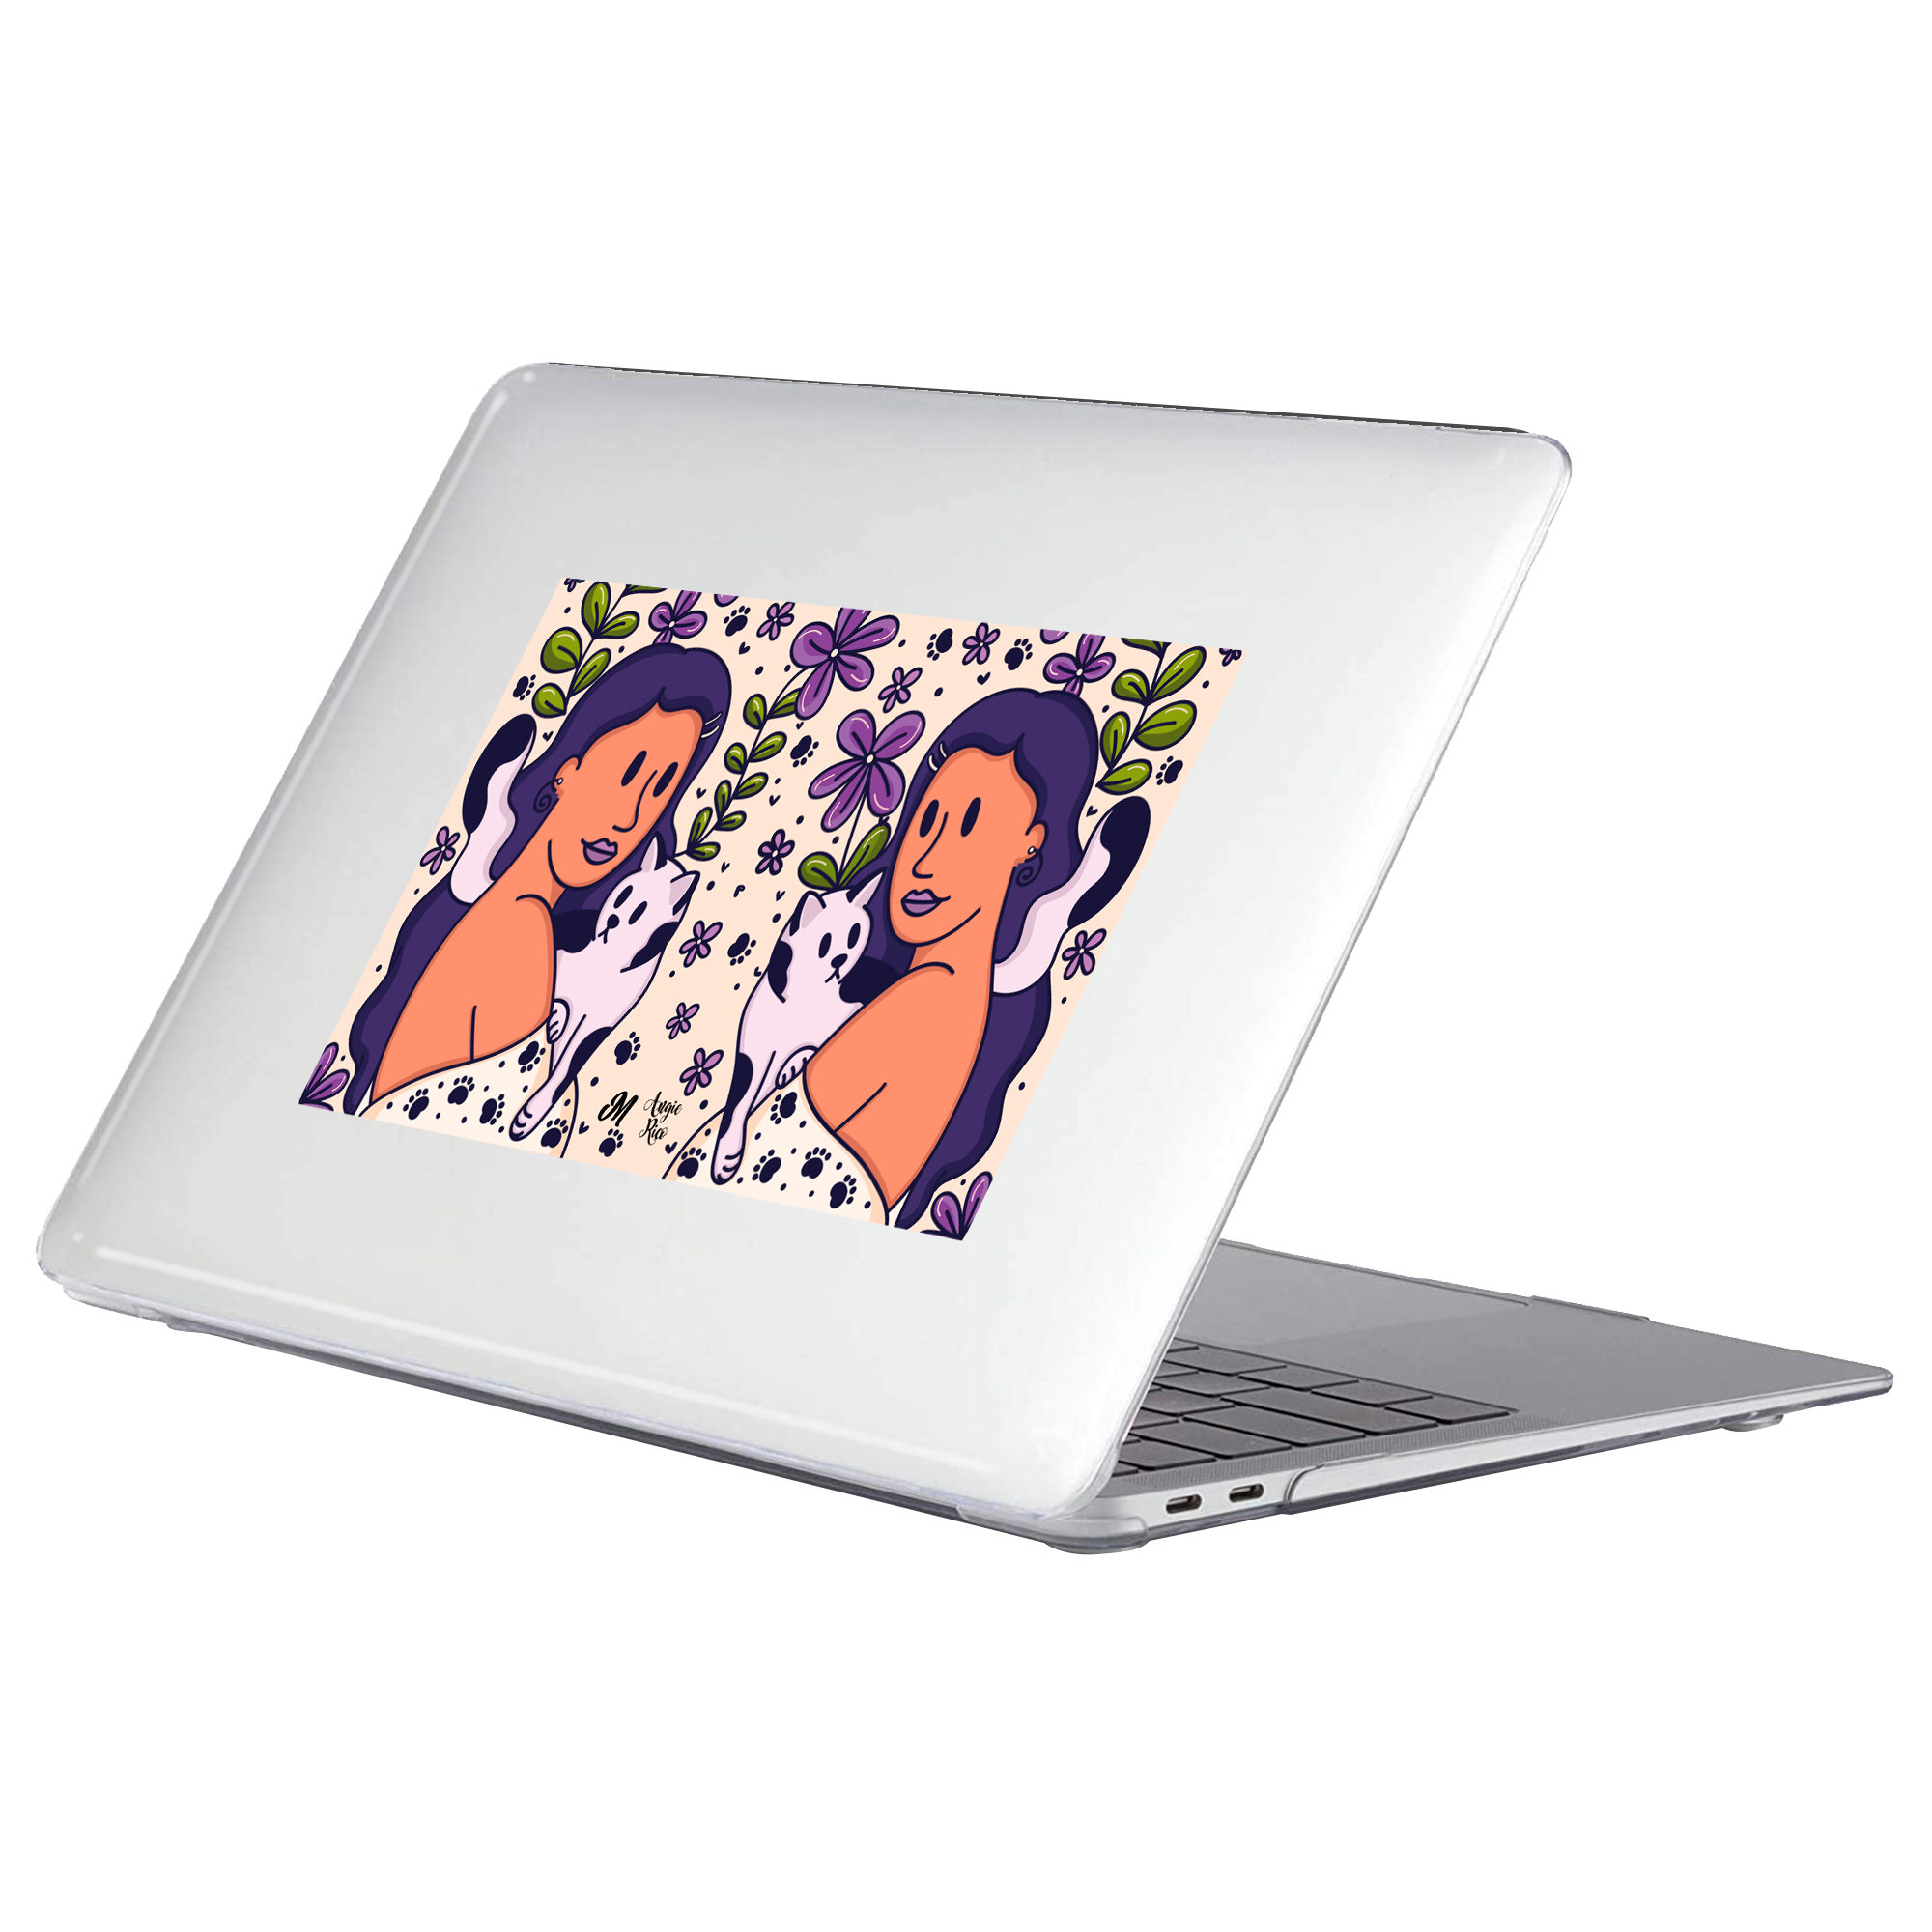 Mujer Gato MacBook Case - Mandala Cases